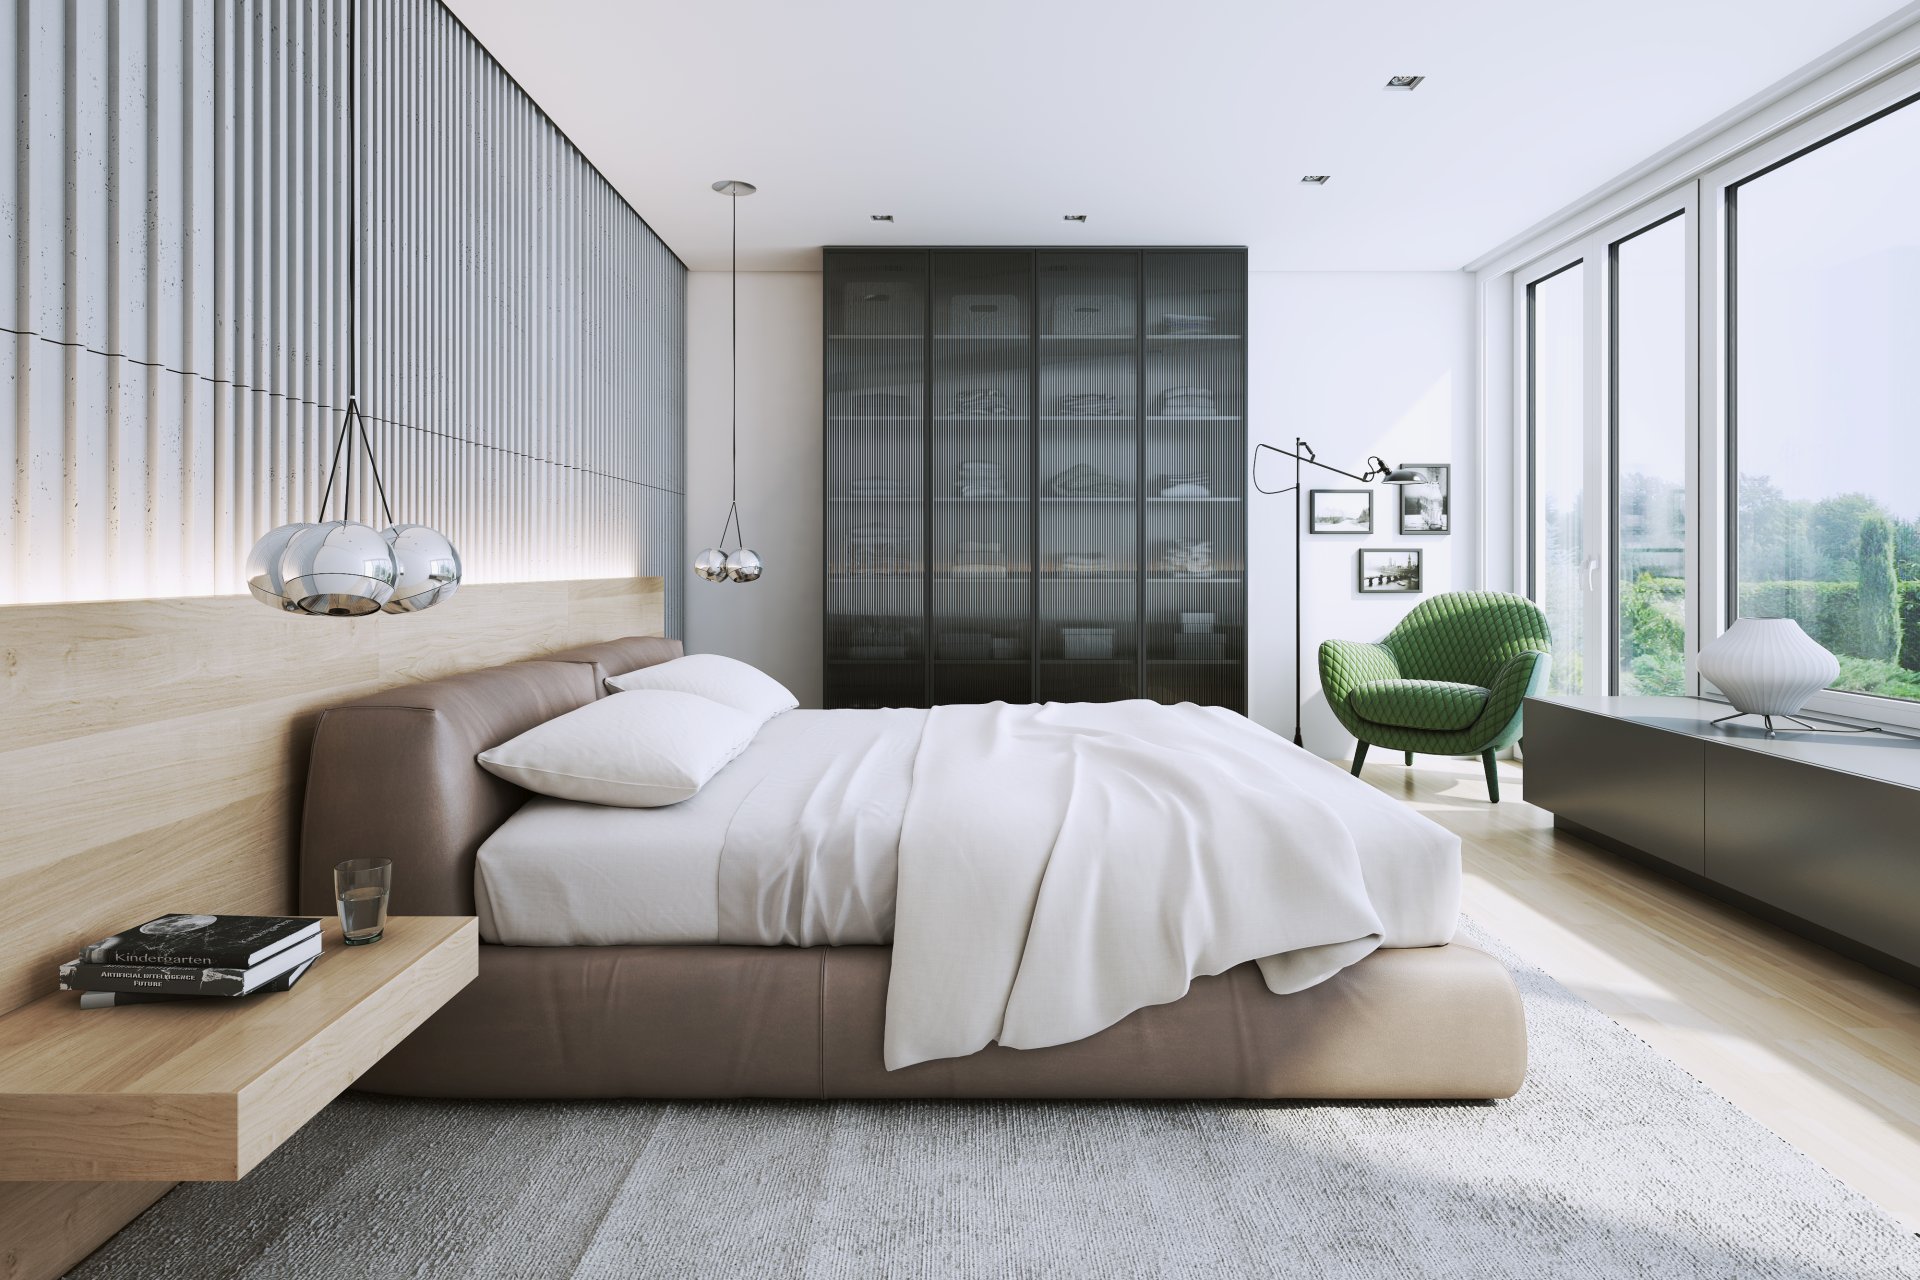 A bedroom with a wardrobe